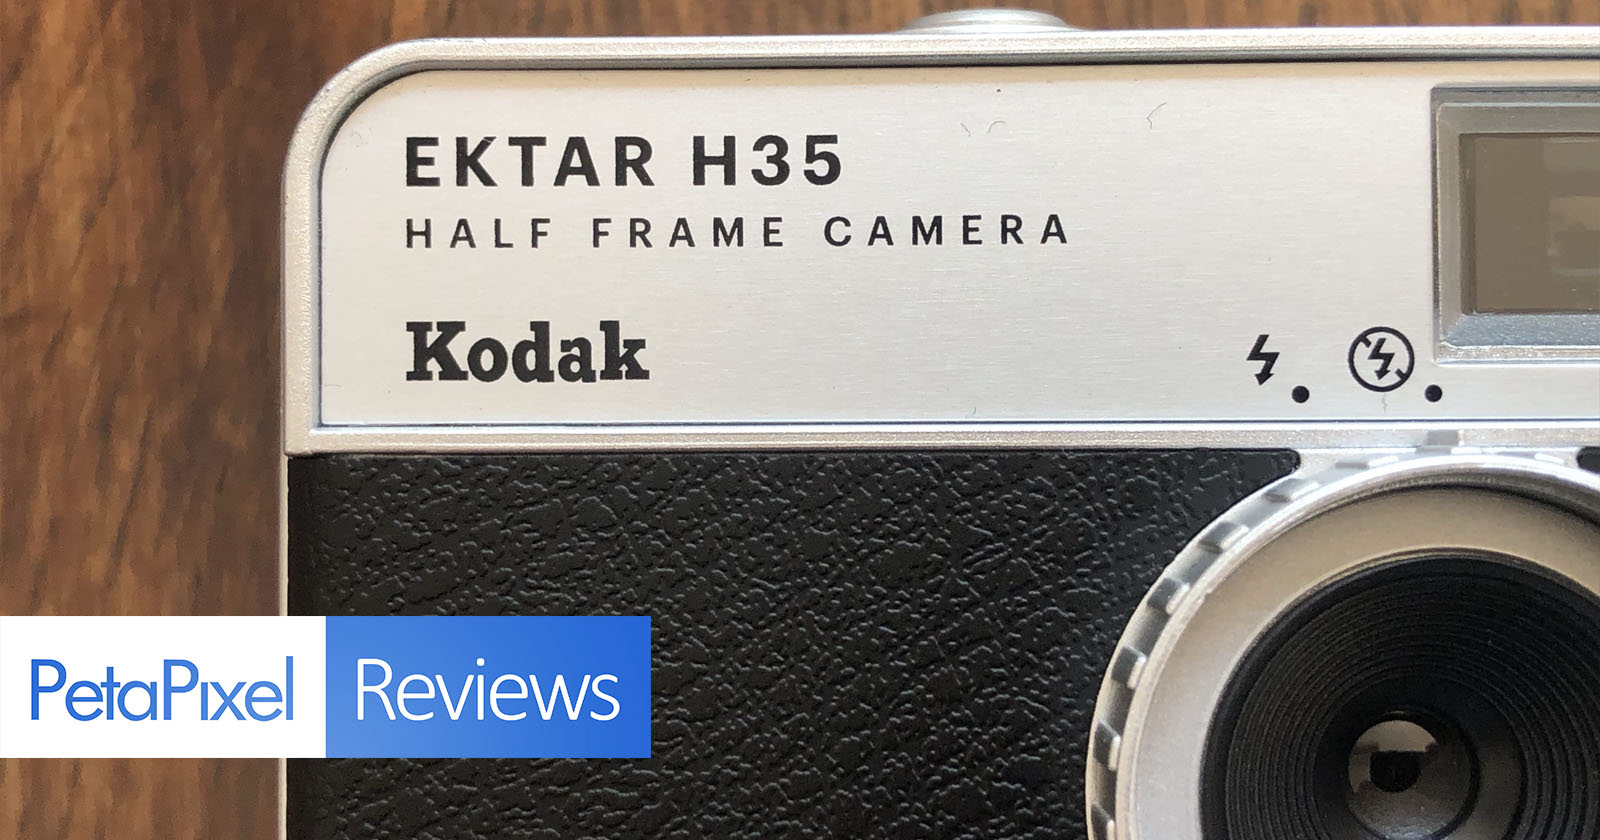 Kodak Ektar H35 Half Frame 35mm Camera With 22mm Lens F/9.5 and Flash -  Black Color